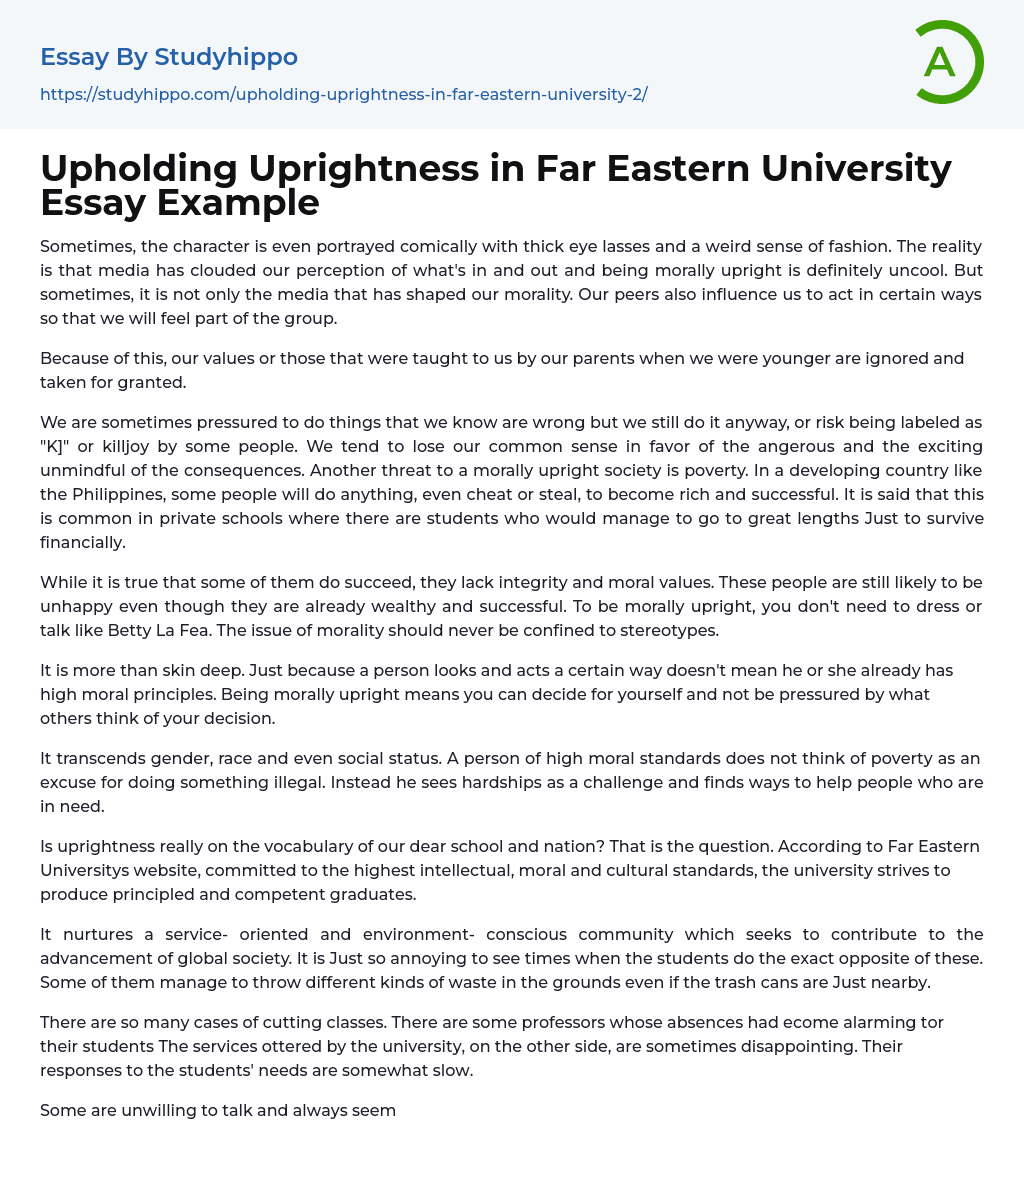 Upholding Uprightness in Far Eastern University Essay Example